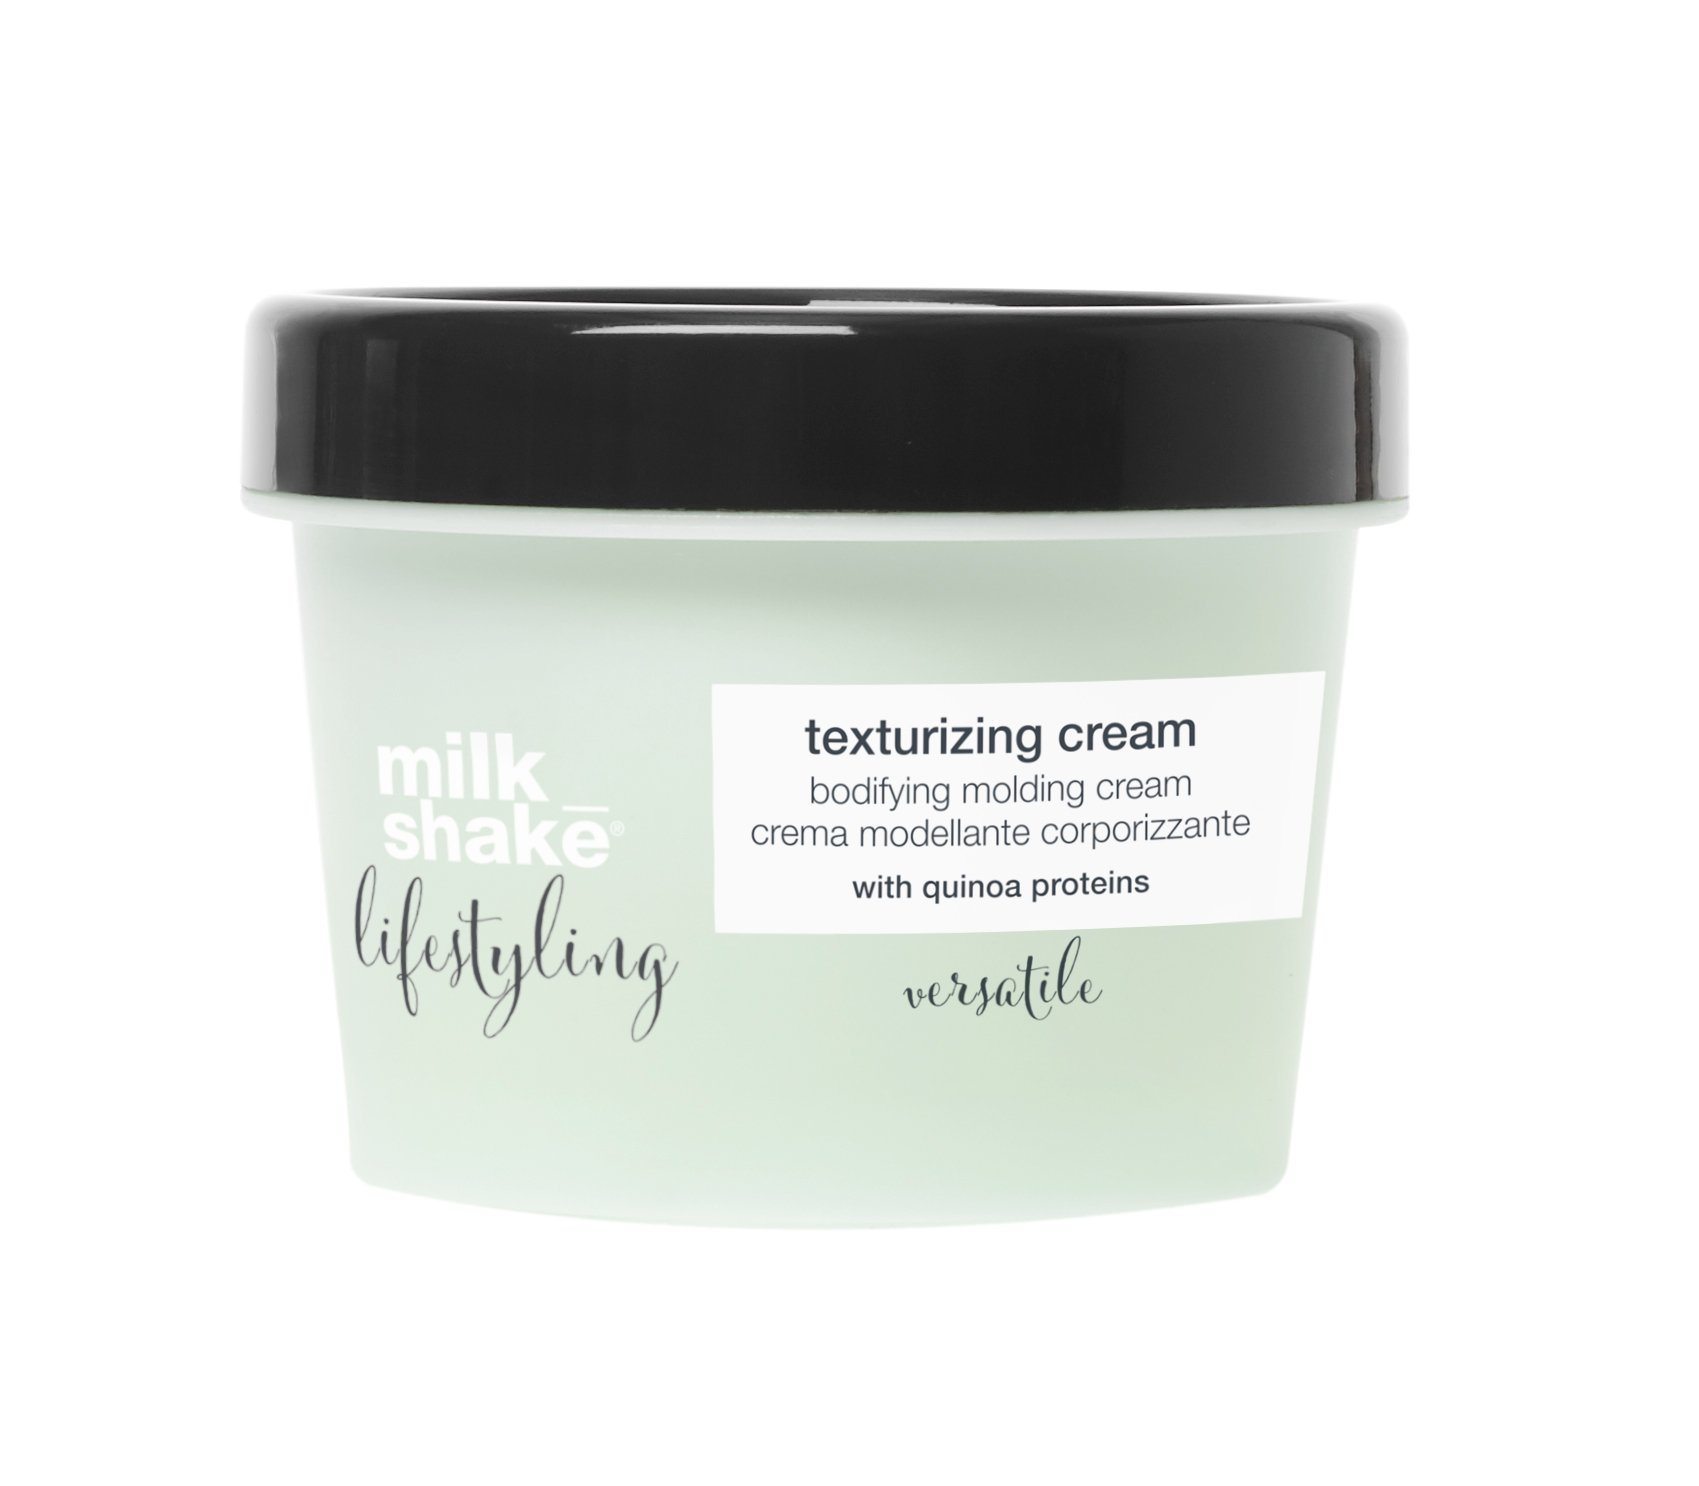 milk_shake Lifestyling Texturizing Cream